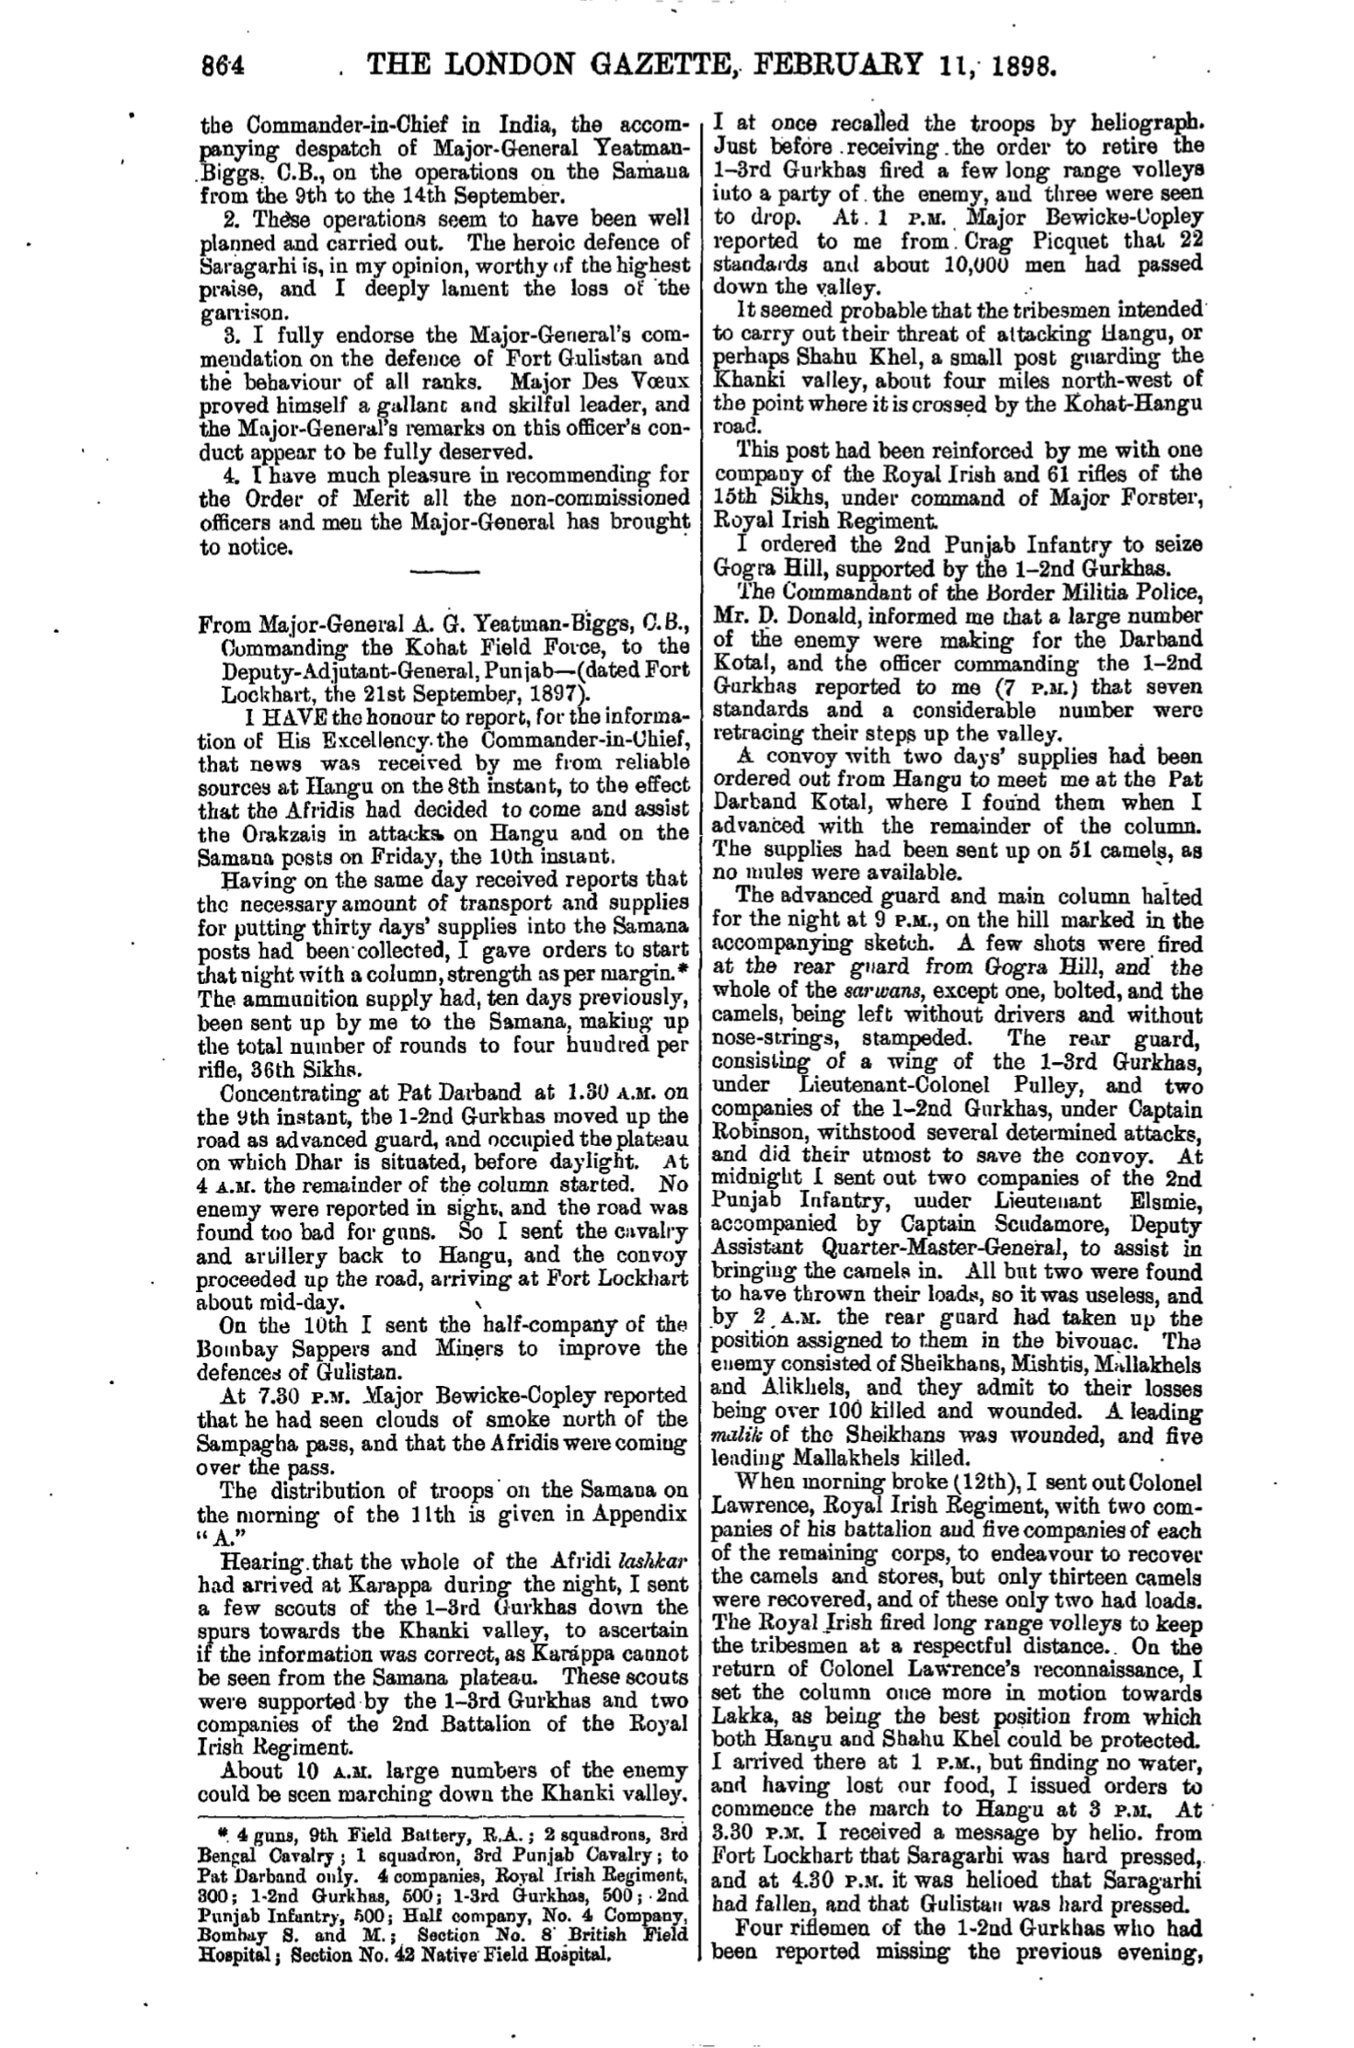 The London Gazette, February 11, 1898